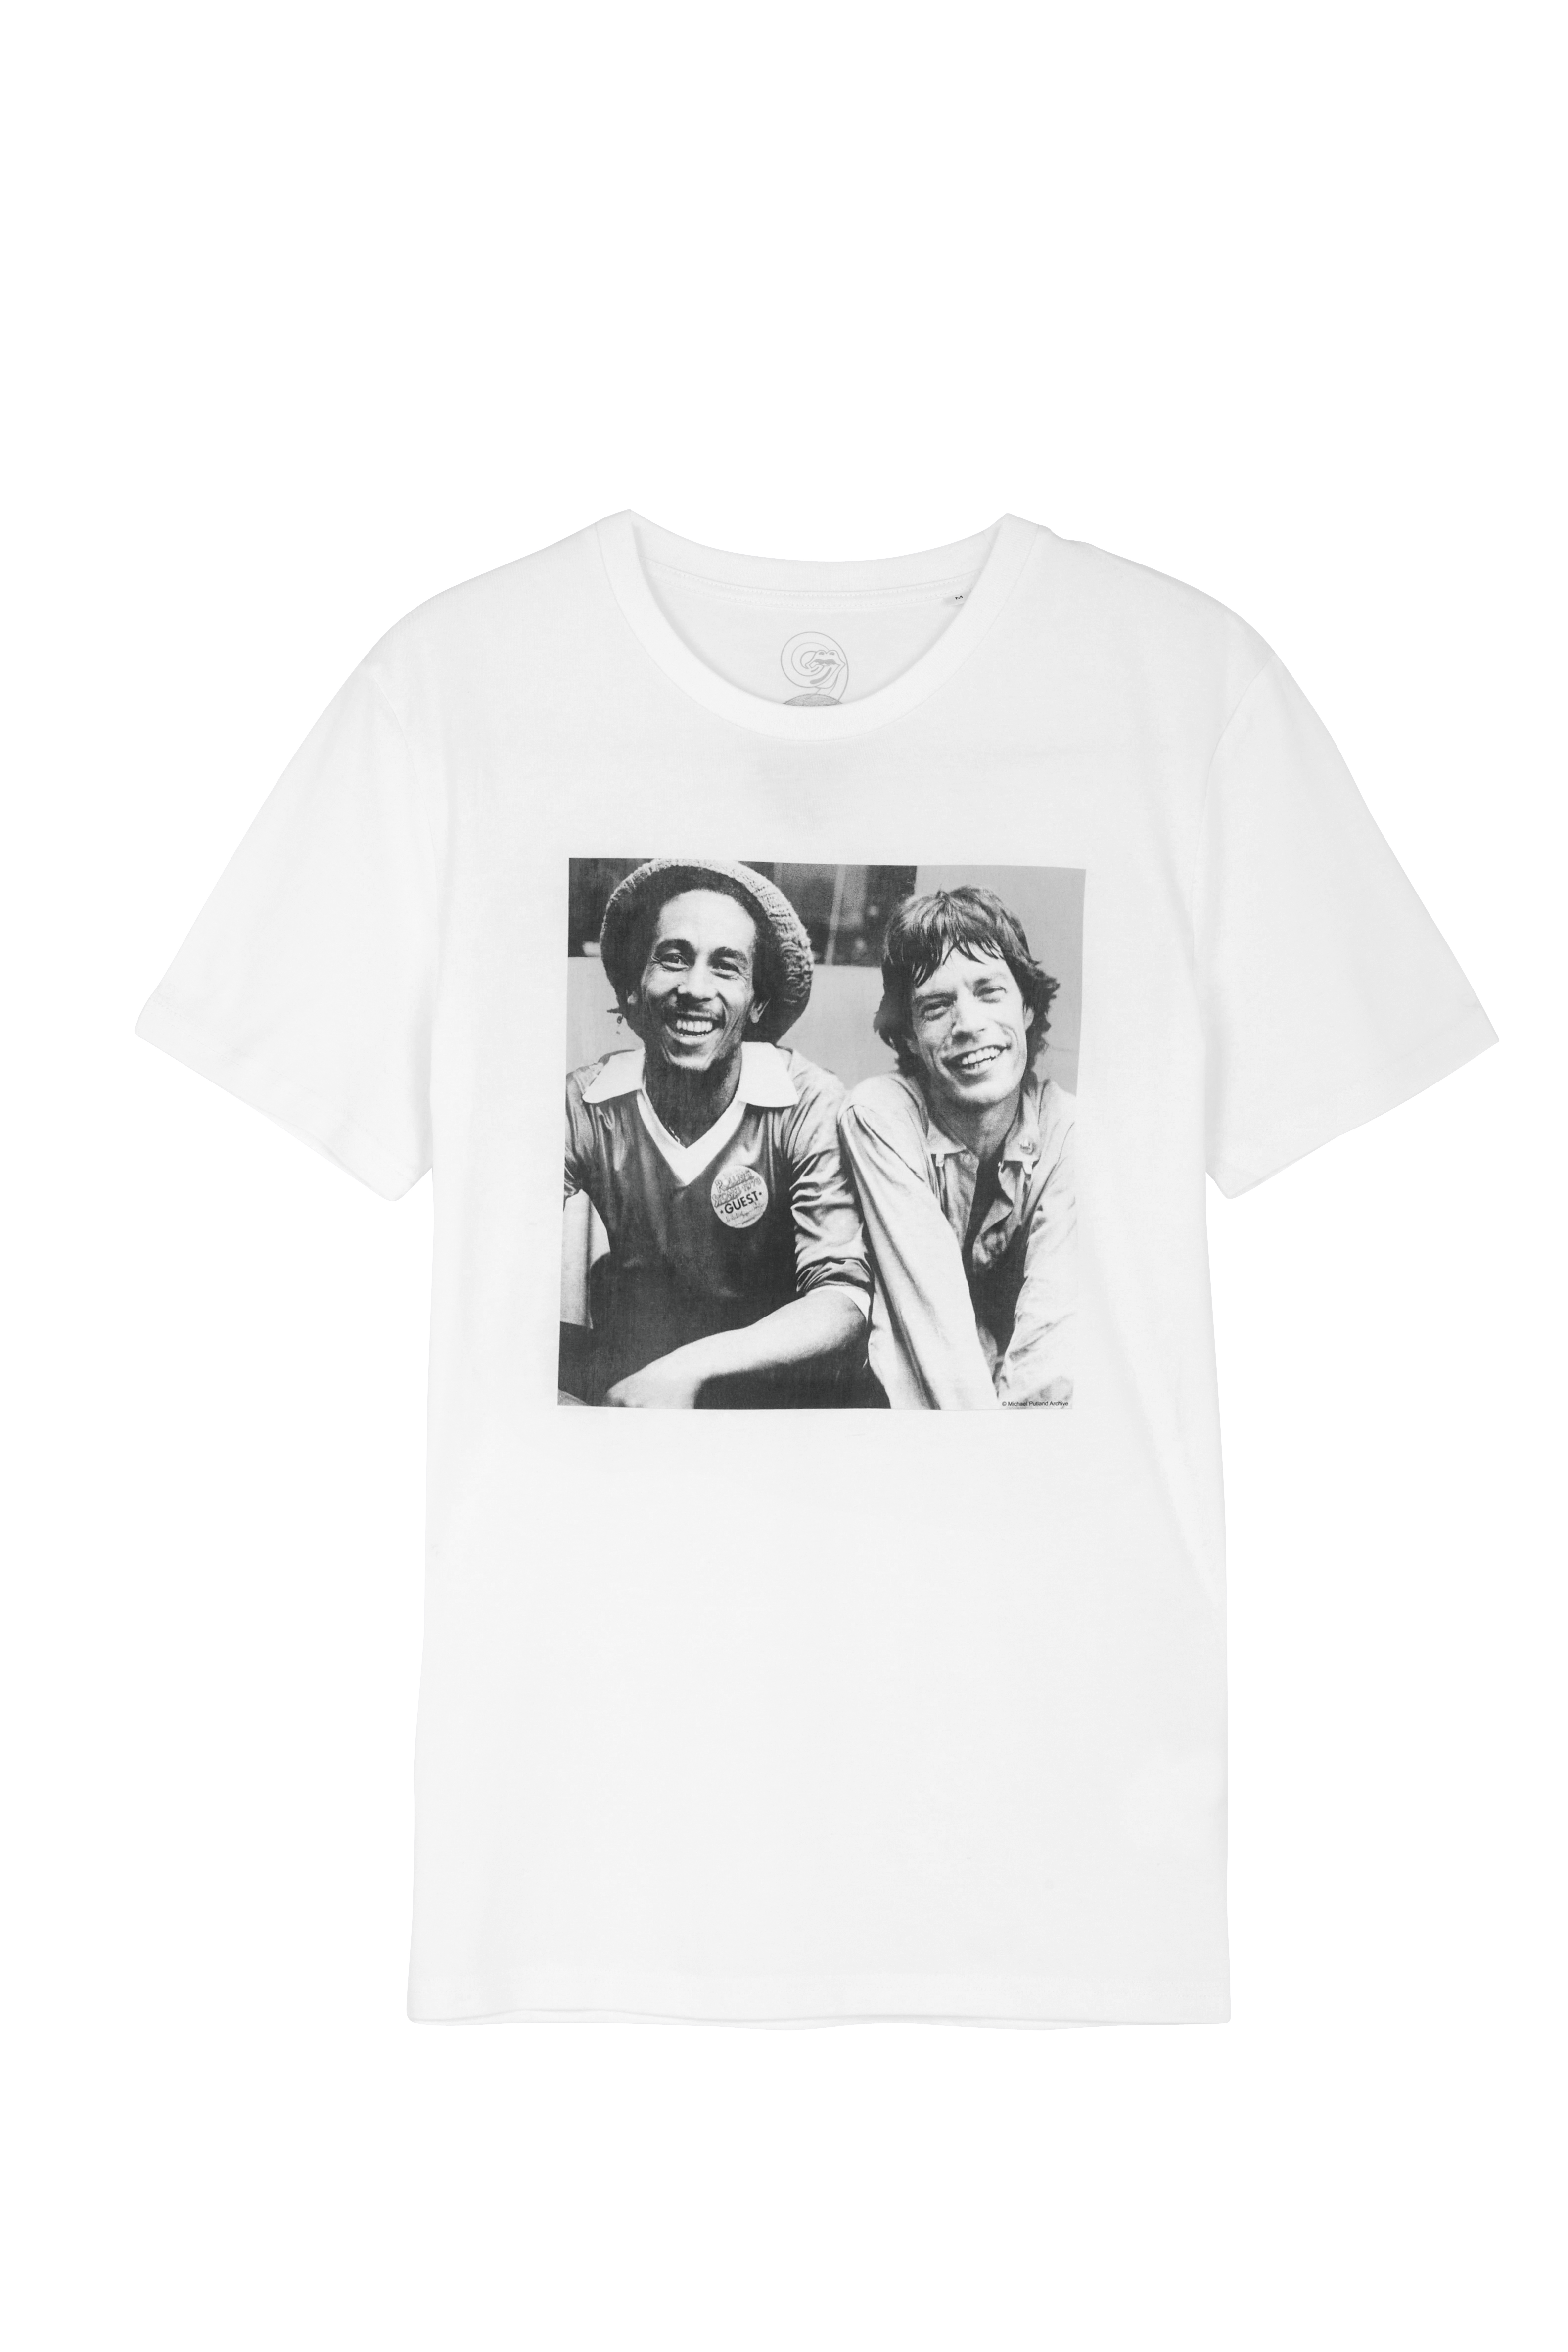 Carnaby - Bob Marley x Mick Jagger T-Shirt